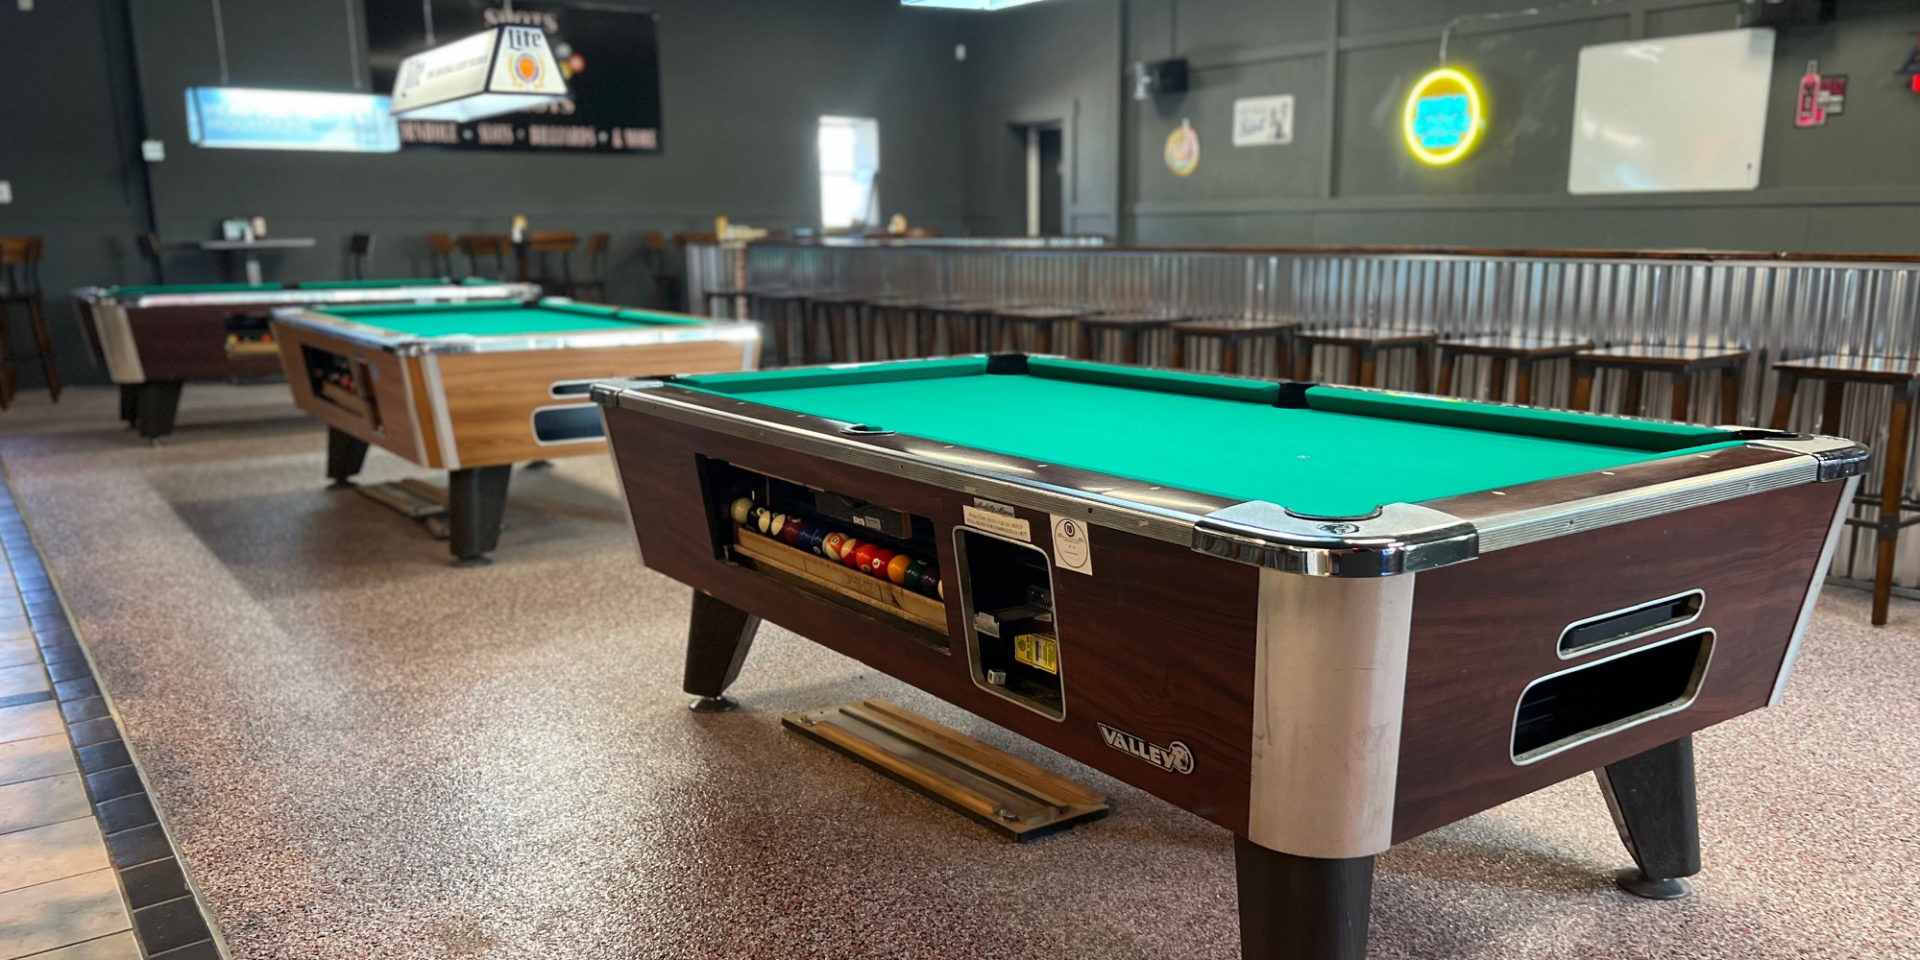 Shots N Slots in Urbana has three pool tables inside a simple bar. Photo by Alyssa Buckley.